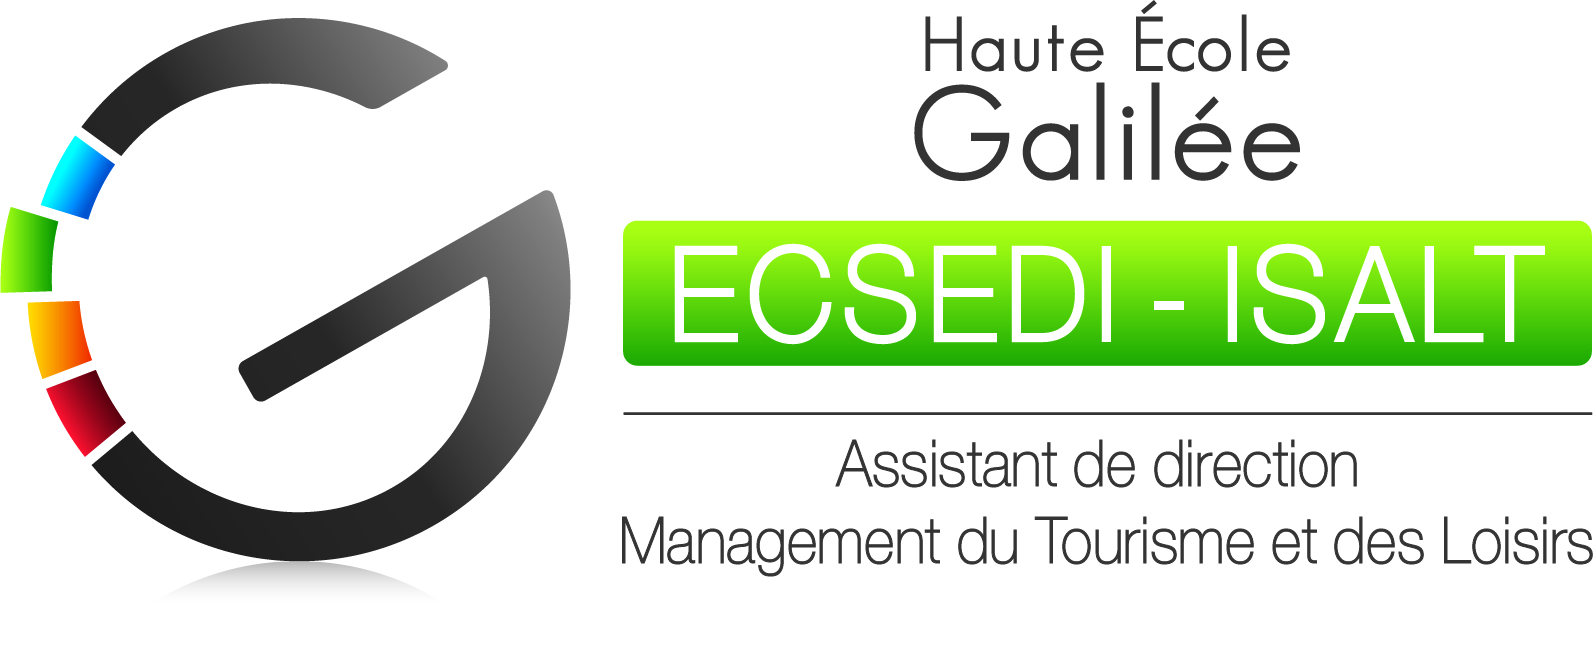 Ecsedi-Isalt / Haute École Galilée - 40